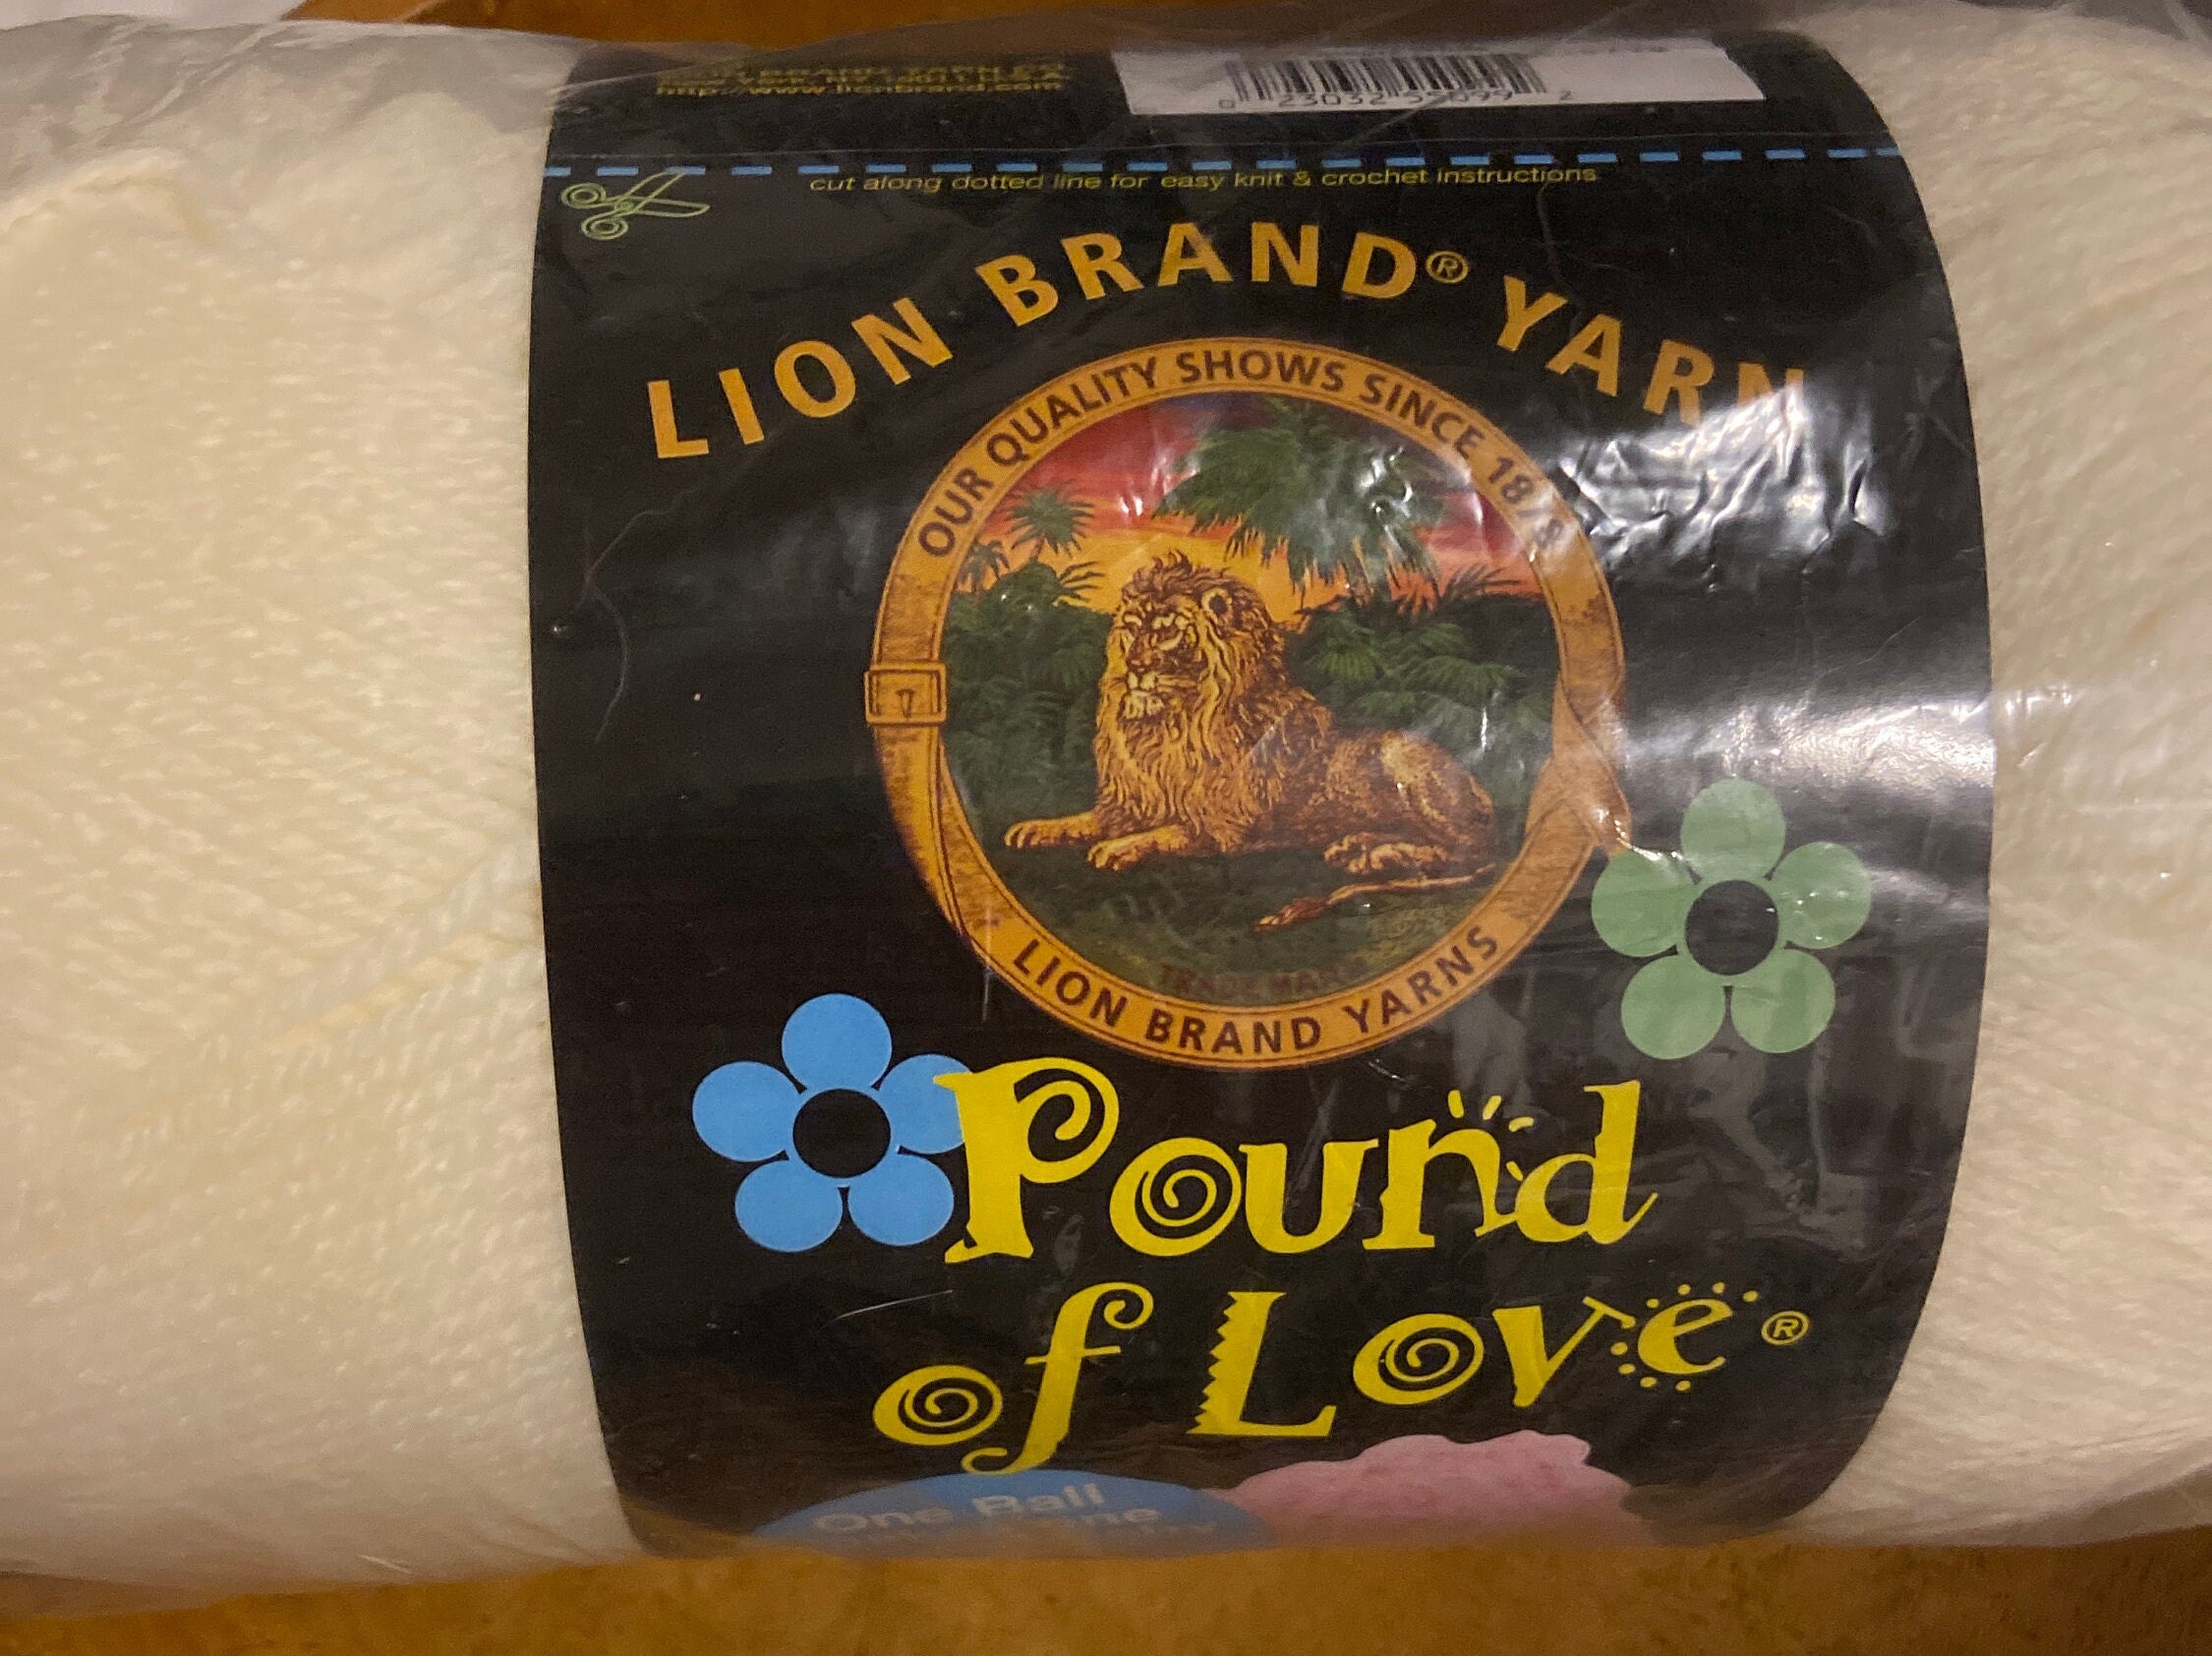 Lion Brand Yarn 550-100 Pound of Love Yarn White AT400 